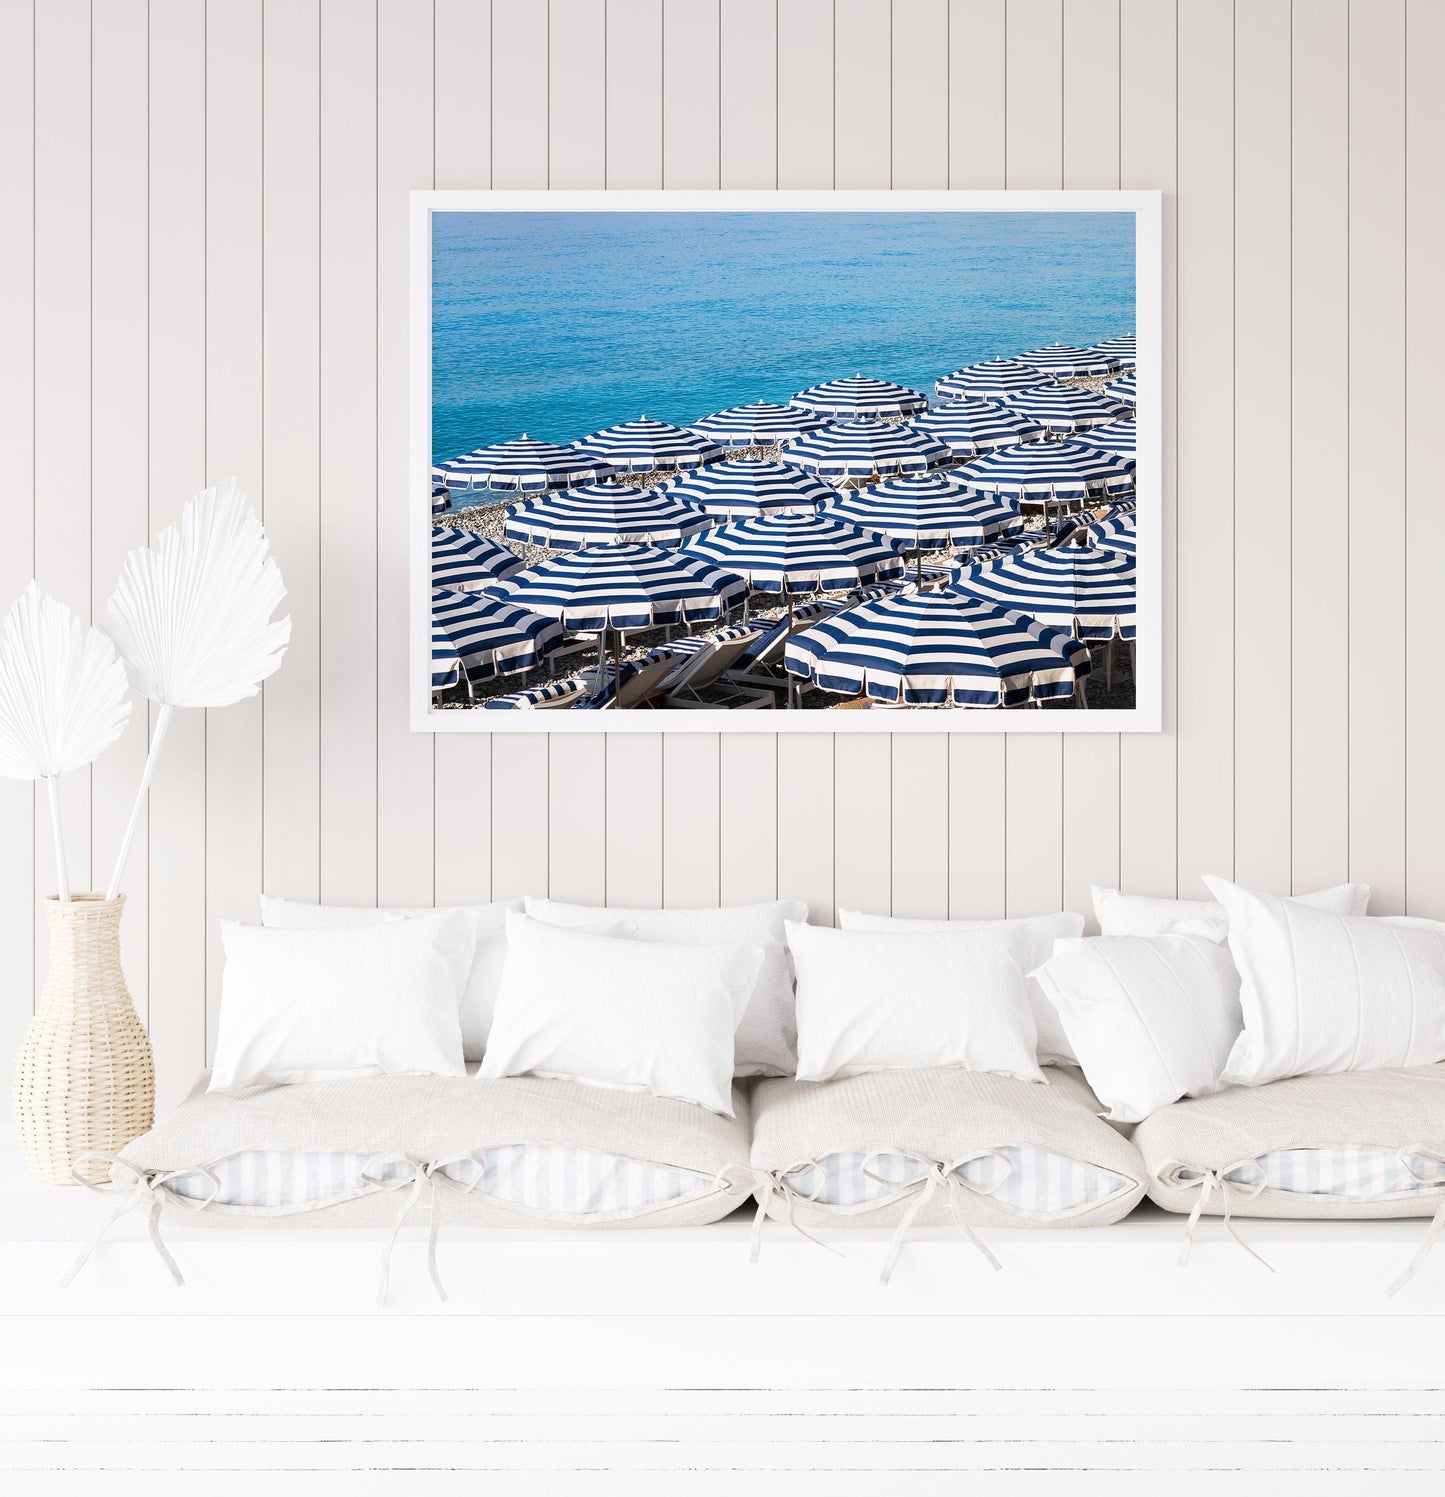 Cote d'Azur Beach Club Umbrellas IV | French Riviera Photography Print - Departures Print Shop